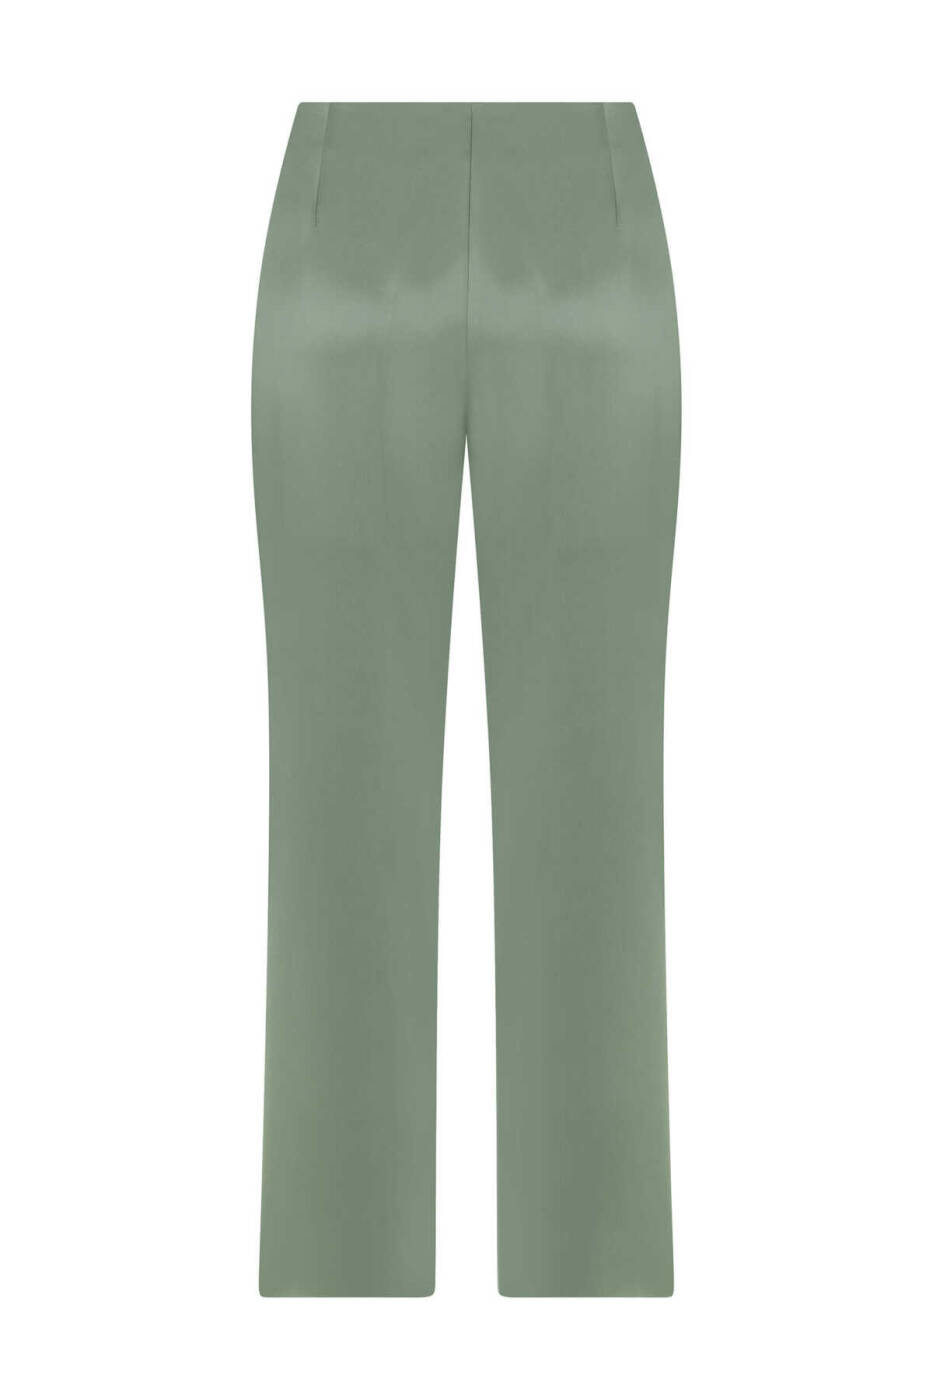  Kısa Paça Mint Kadın Pantolon Nil Yeşili - 5